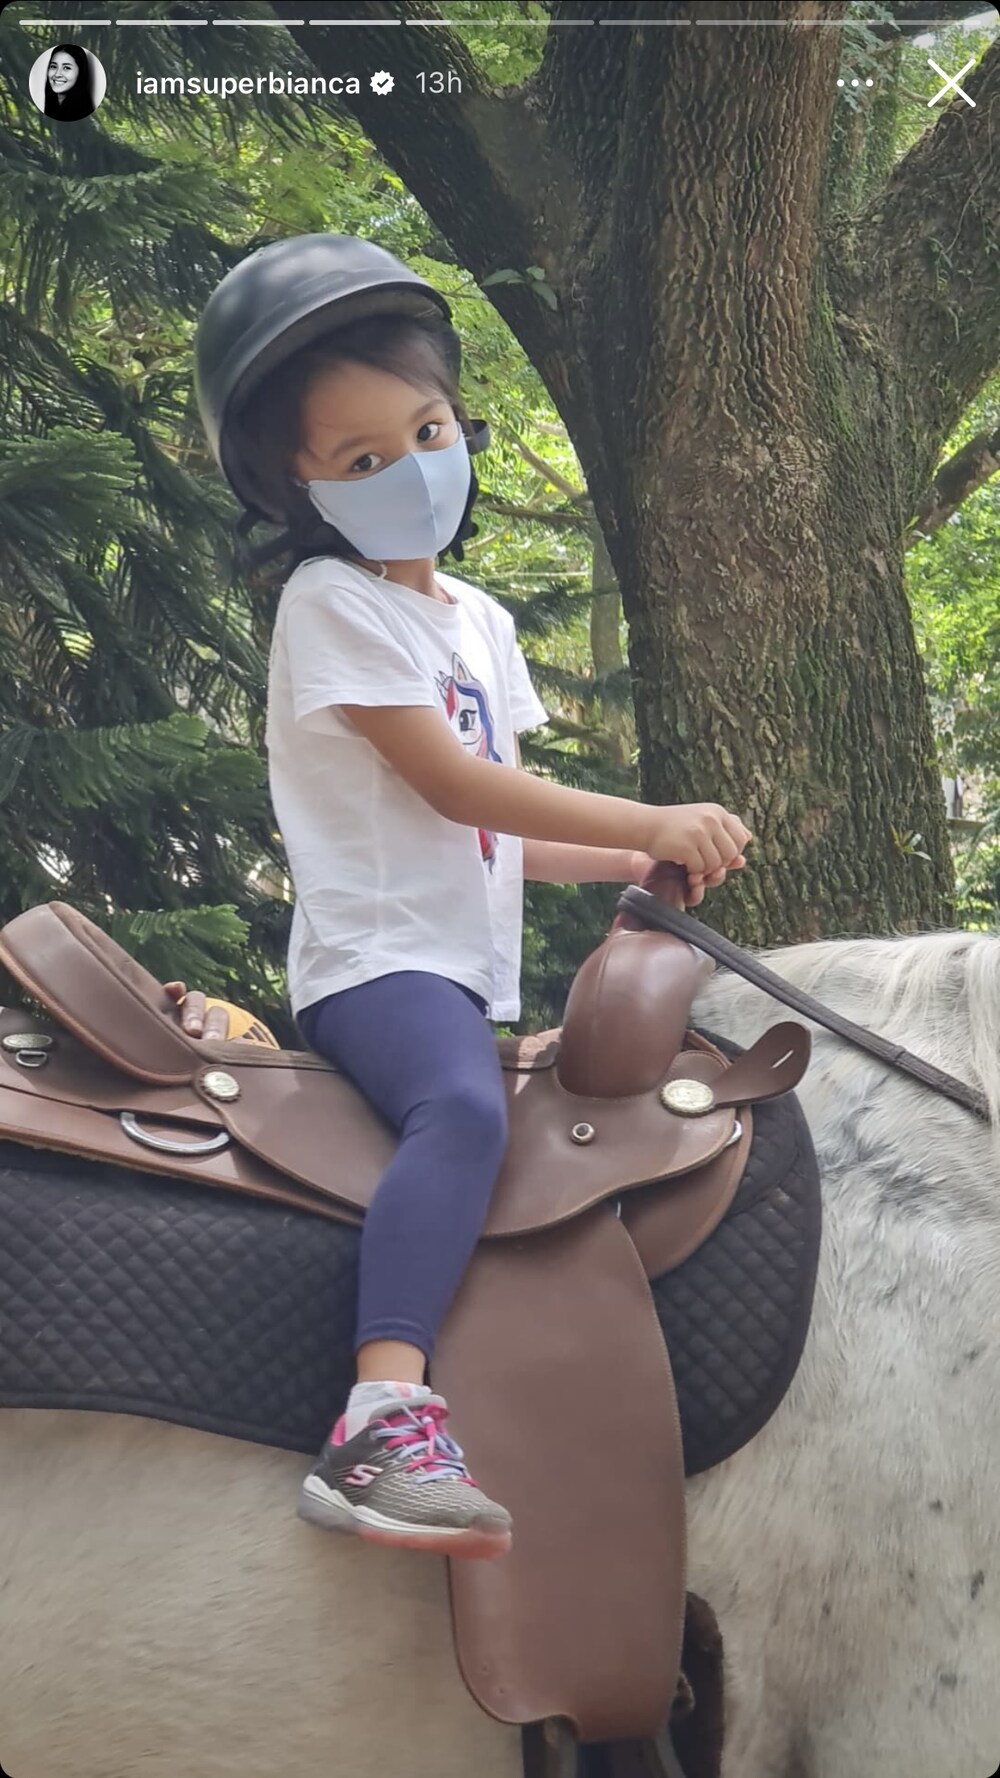 Lucia Martine Intal's younger sister Carmen Eliana Intal goes horseback riding.